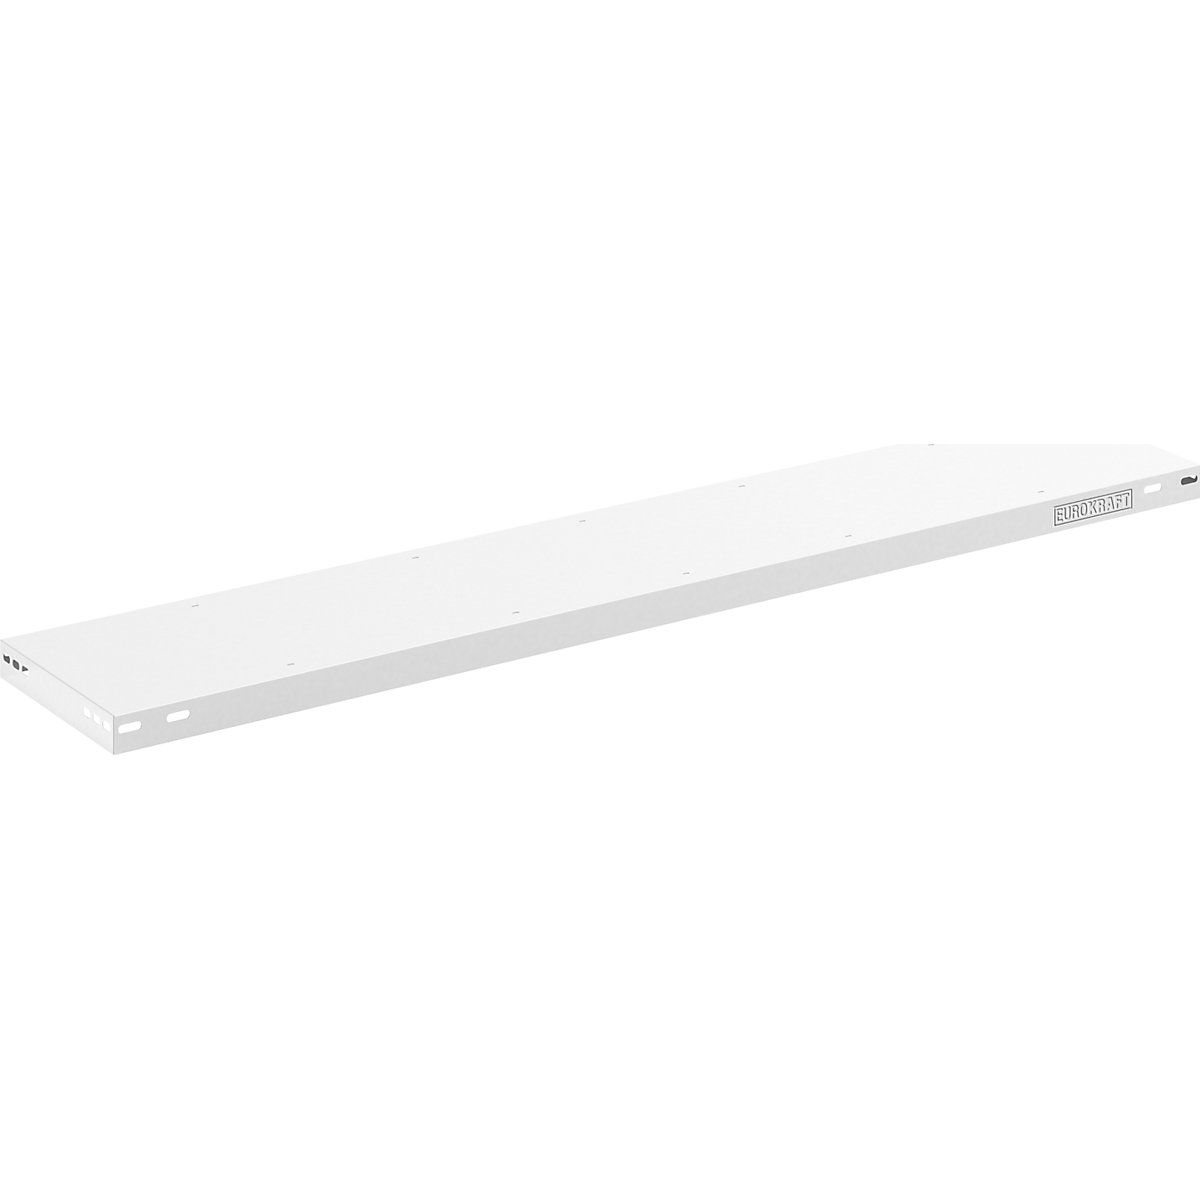 Additional shelf – hofe, WxD 1300 x 300 mm, max. shelf load 175 kg, grey-4